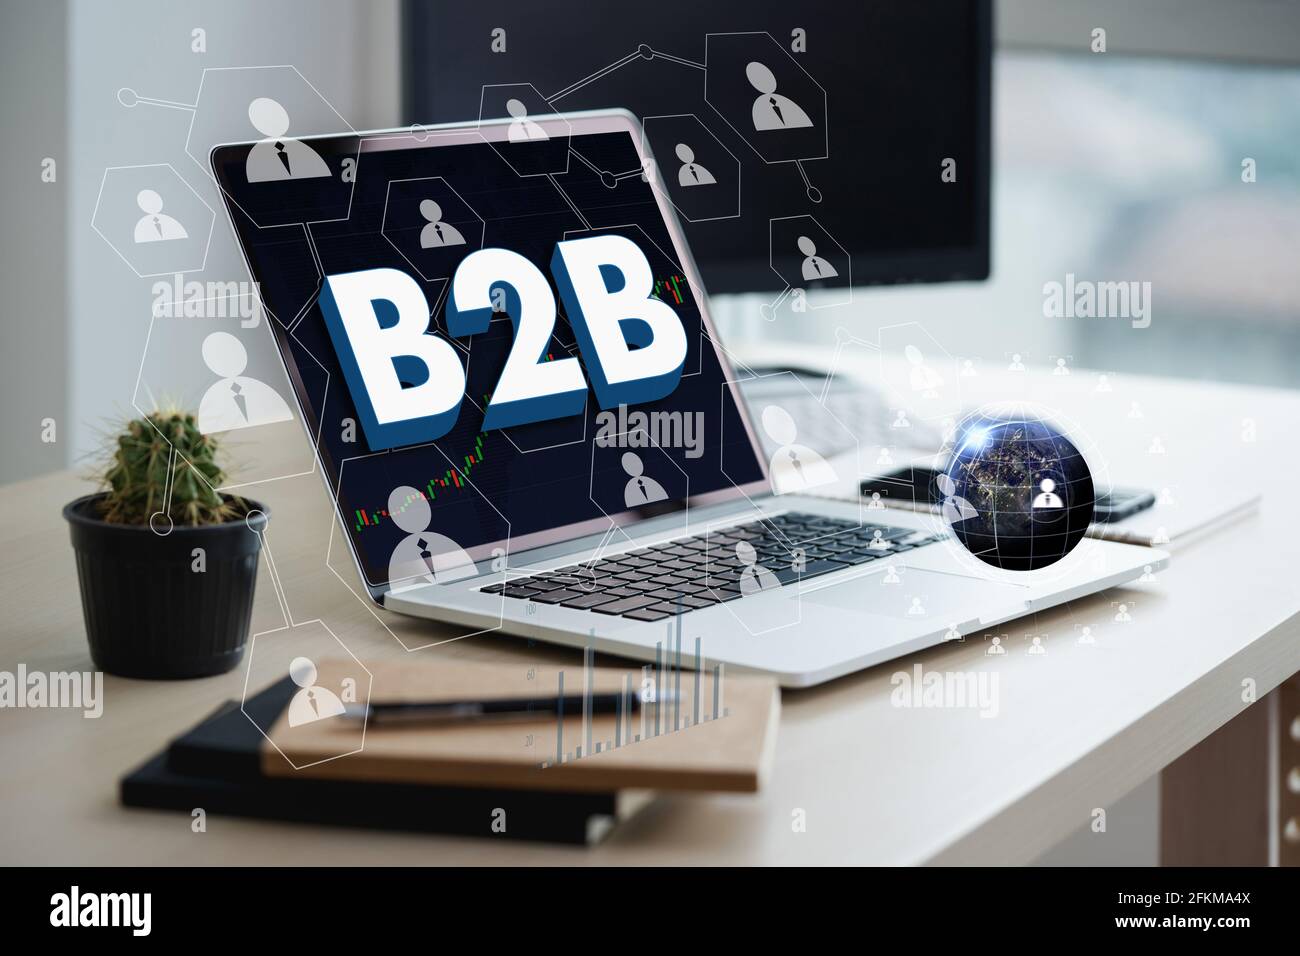 B2B Marketing Business To Business Marketing Company and B2B Business Company Commerce Technology Marketing Stock Photo